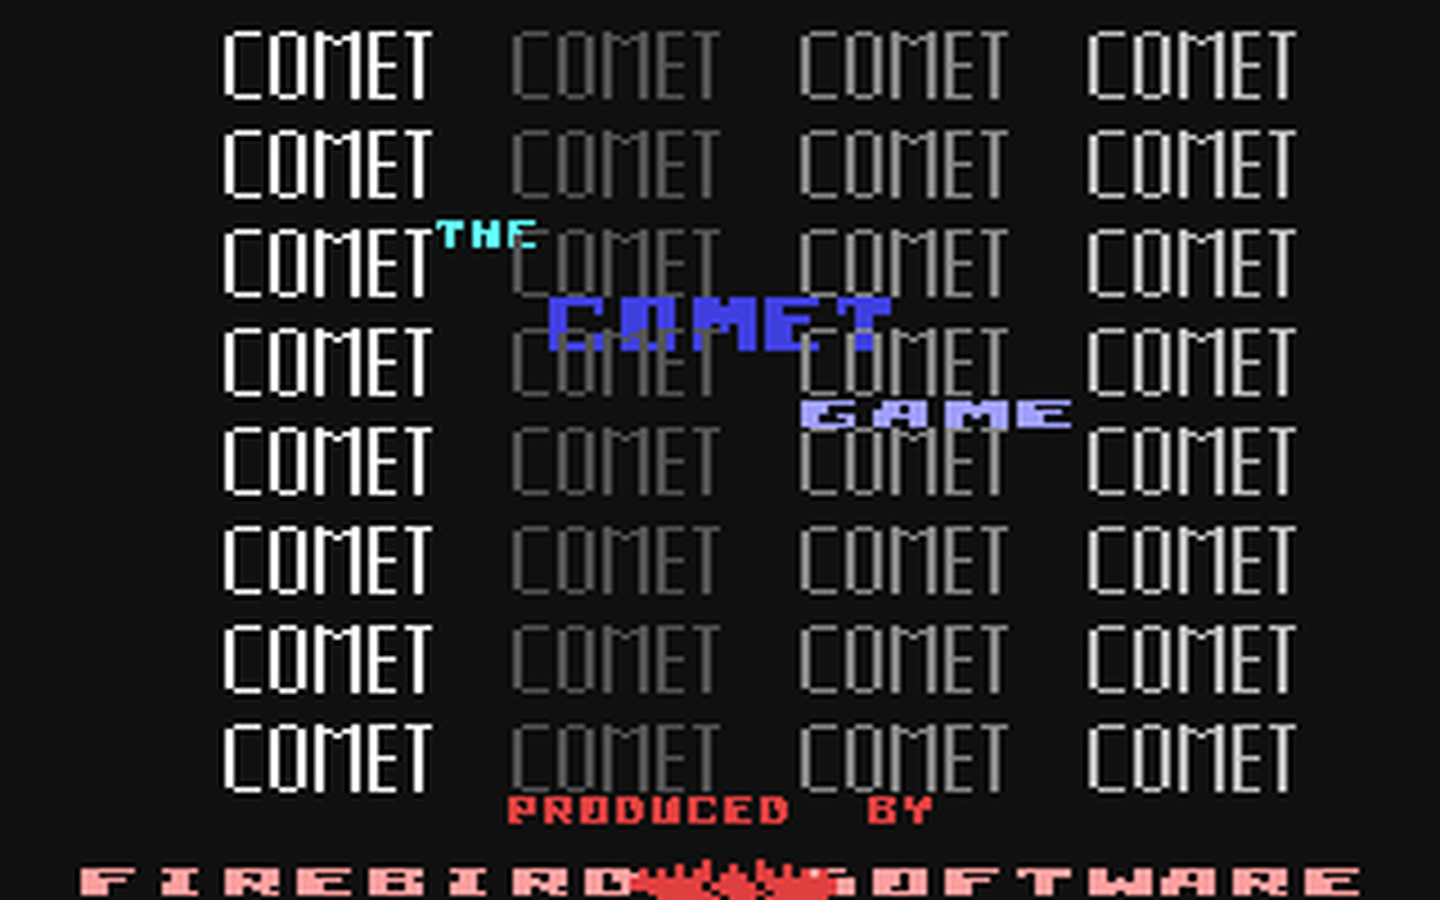 C64 GameBase Comet_Game,_The Firebird 1986